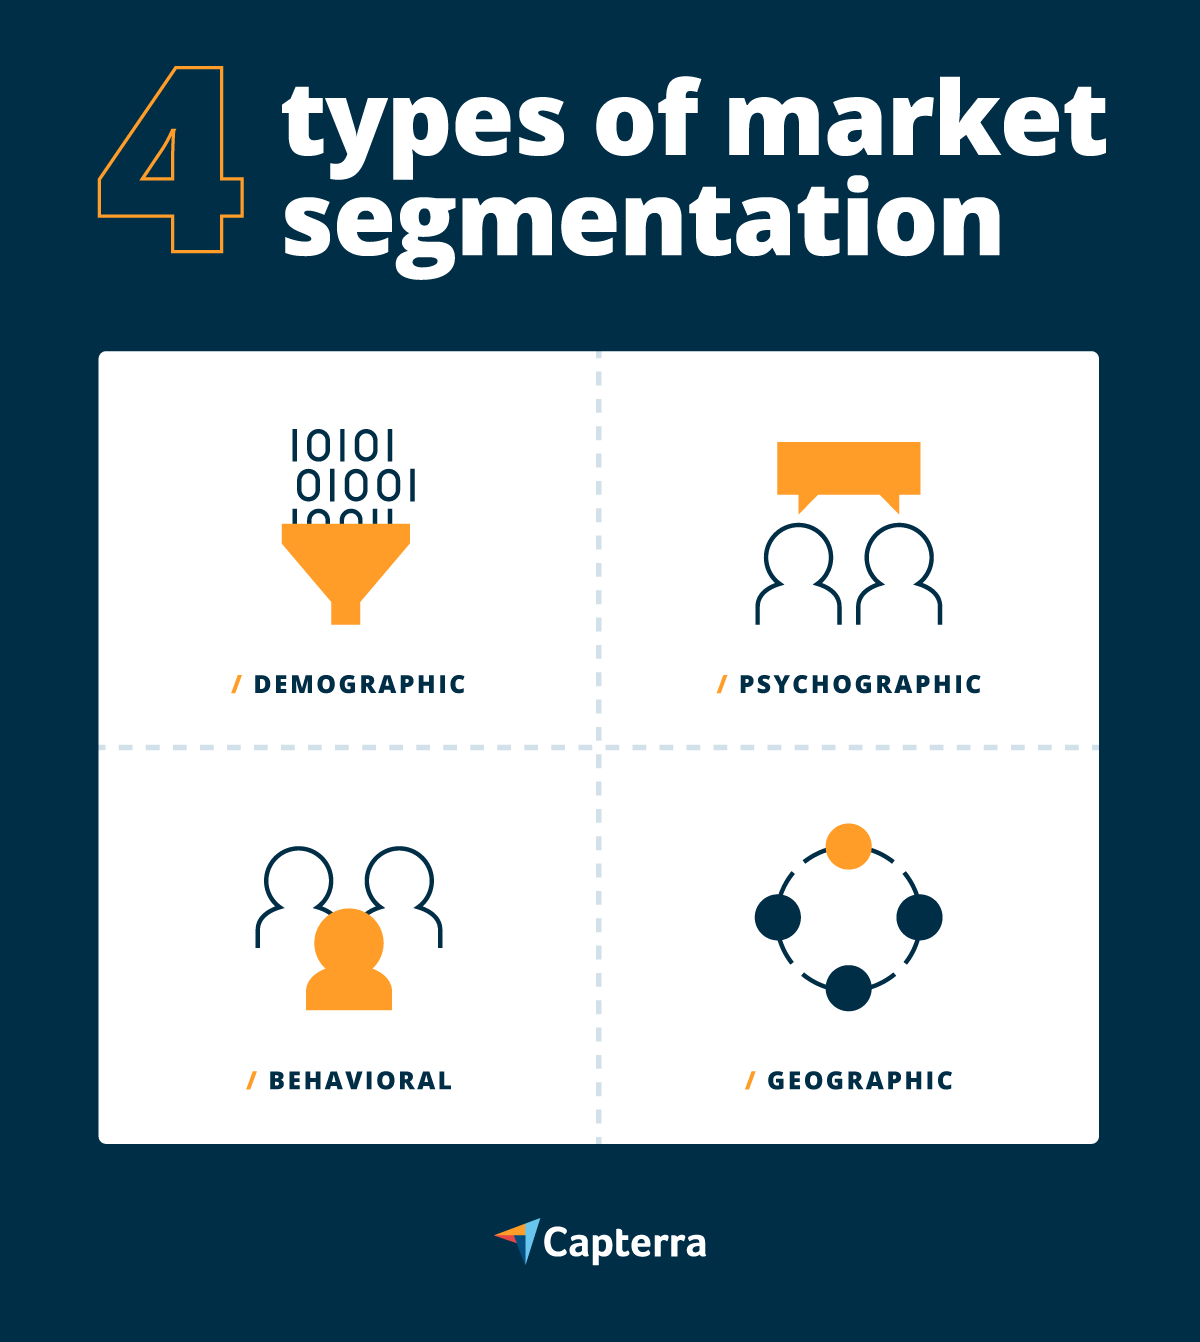 Target Market: Definition, Purpose, Examples, Market Segments